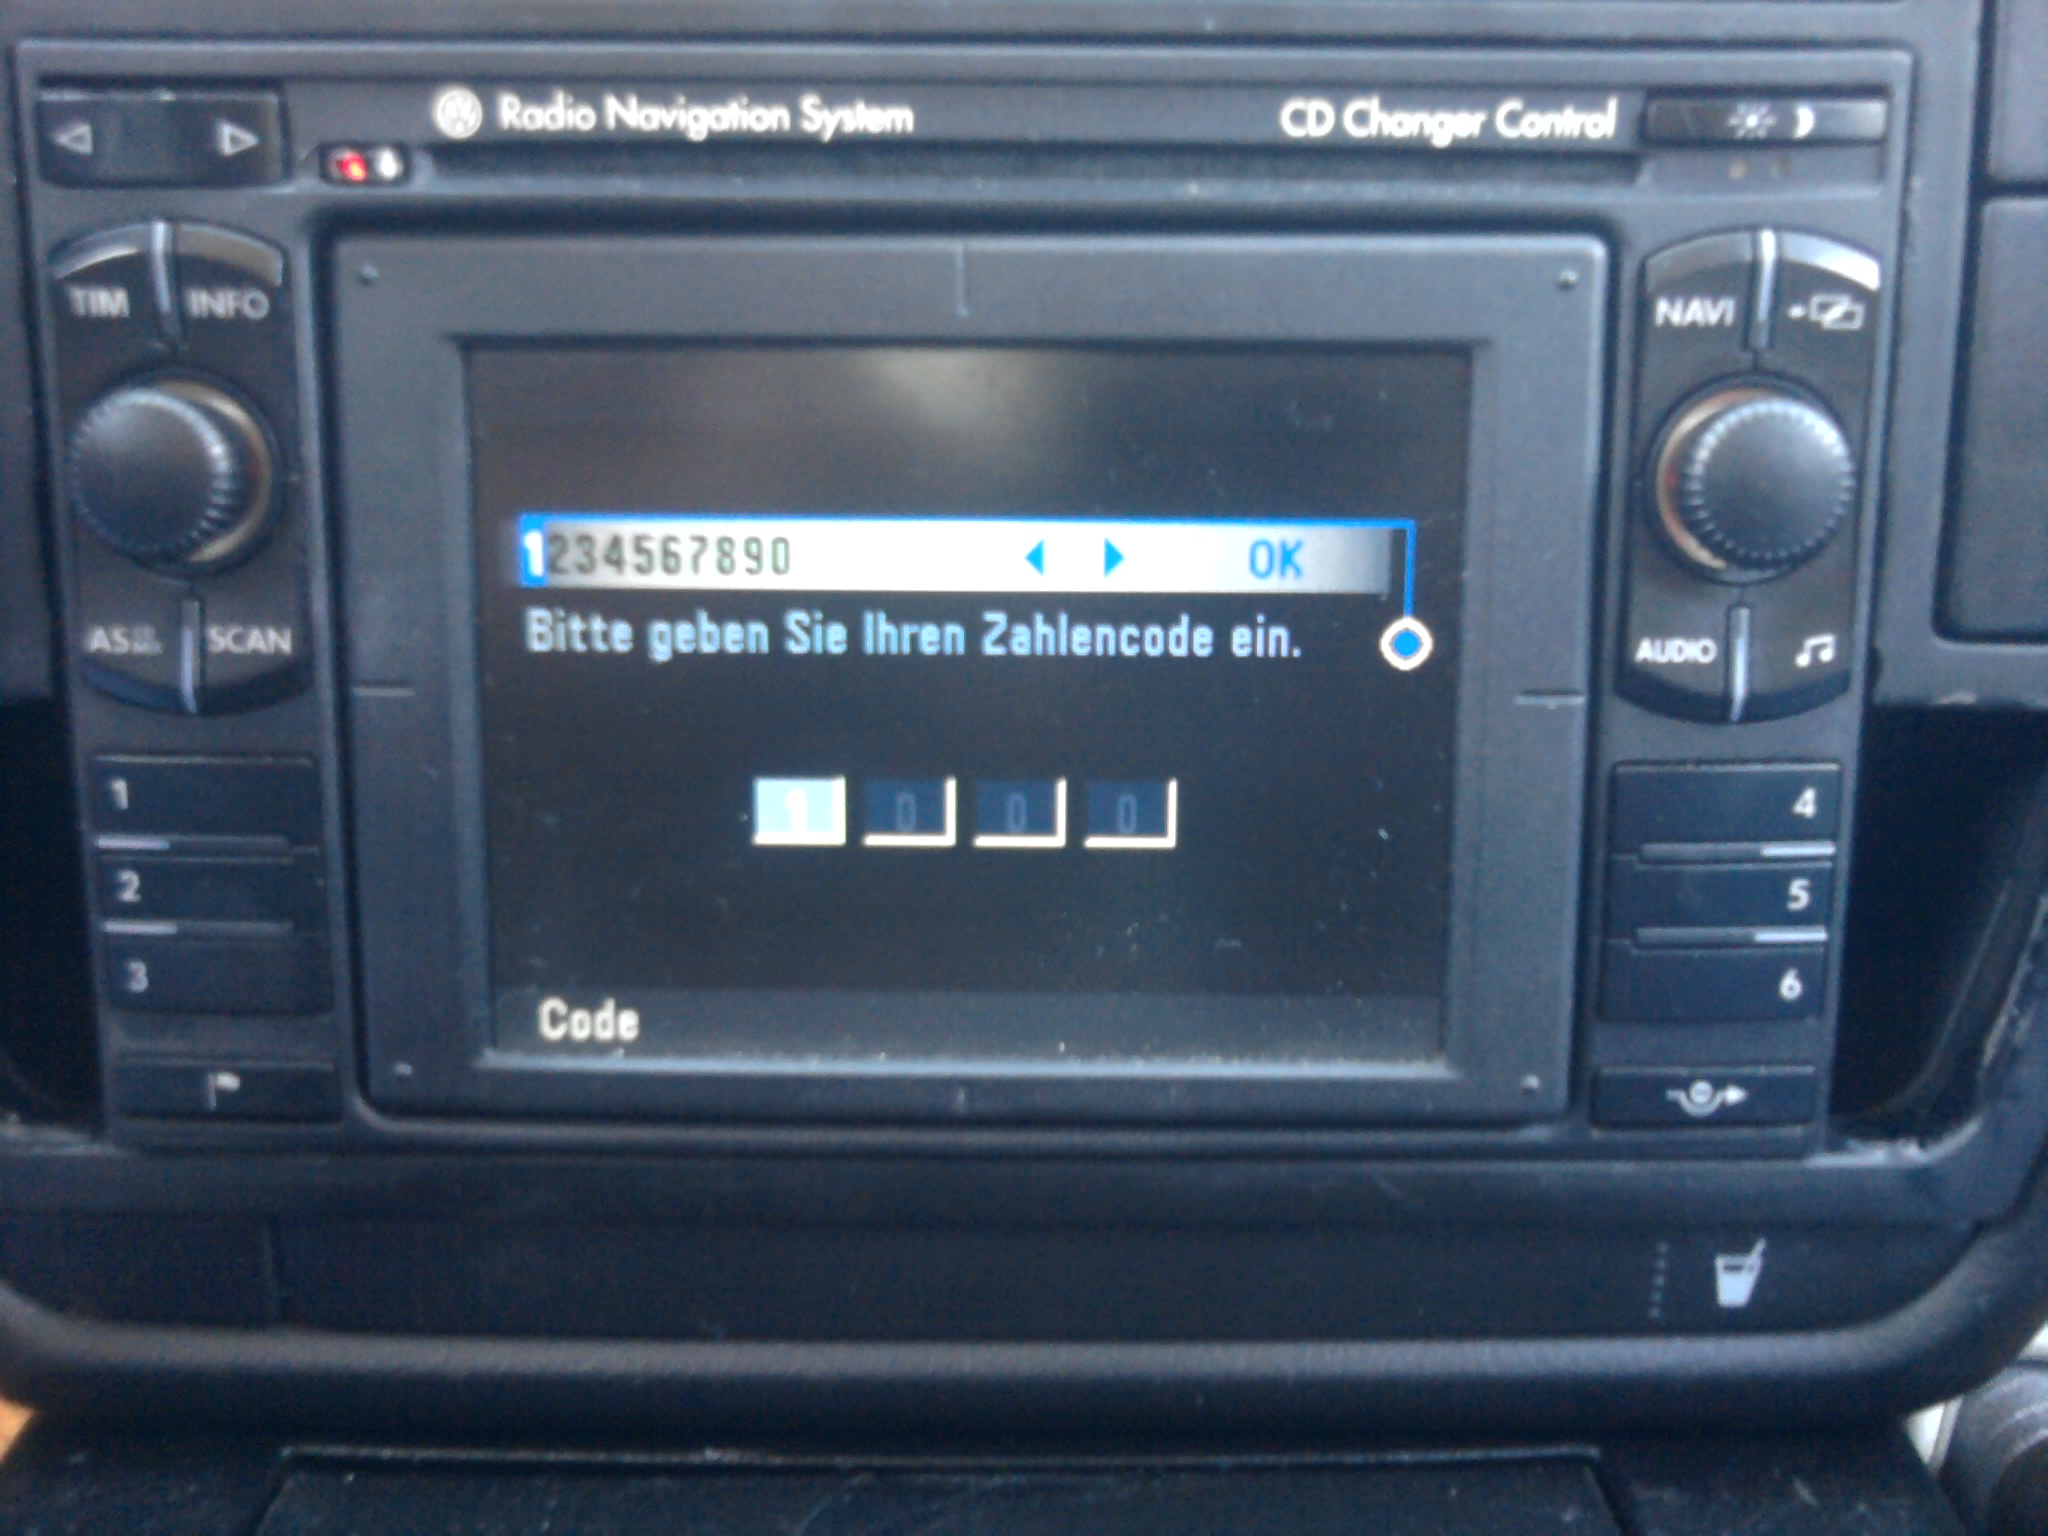 VW Passat B5 Radio Nav. System MFD kod elektroda.pl